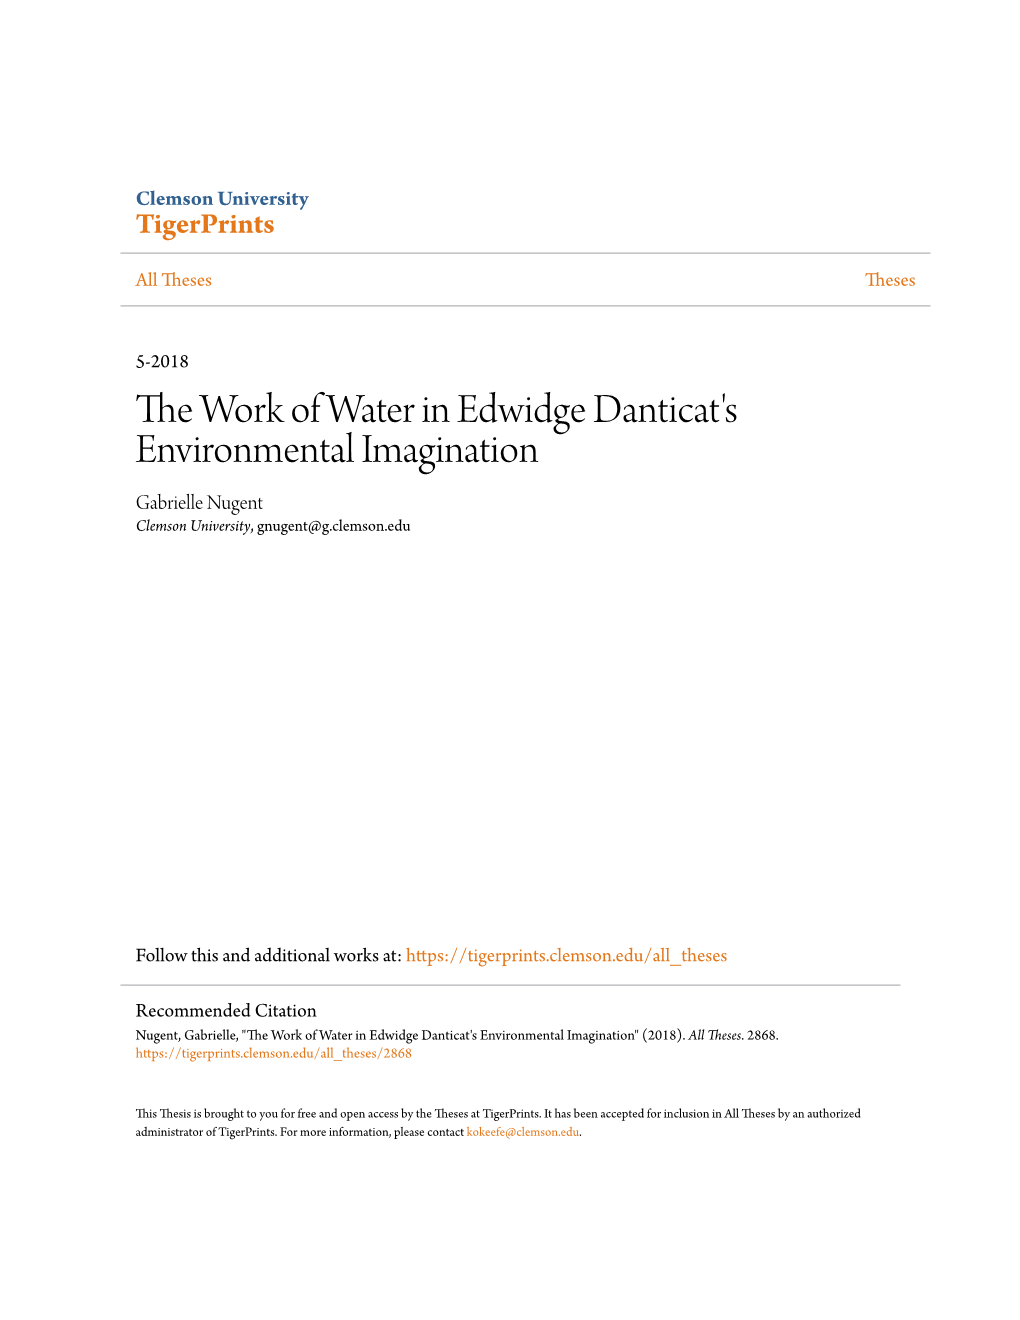 The Work of Water in Edwidge Danticat's Environmental Imagination